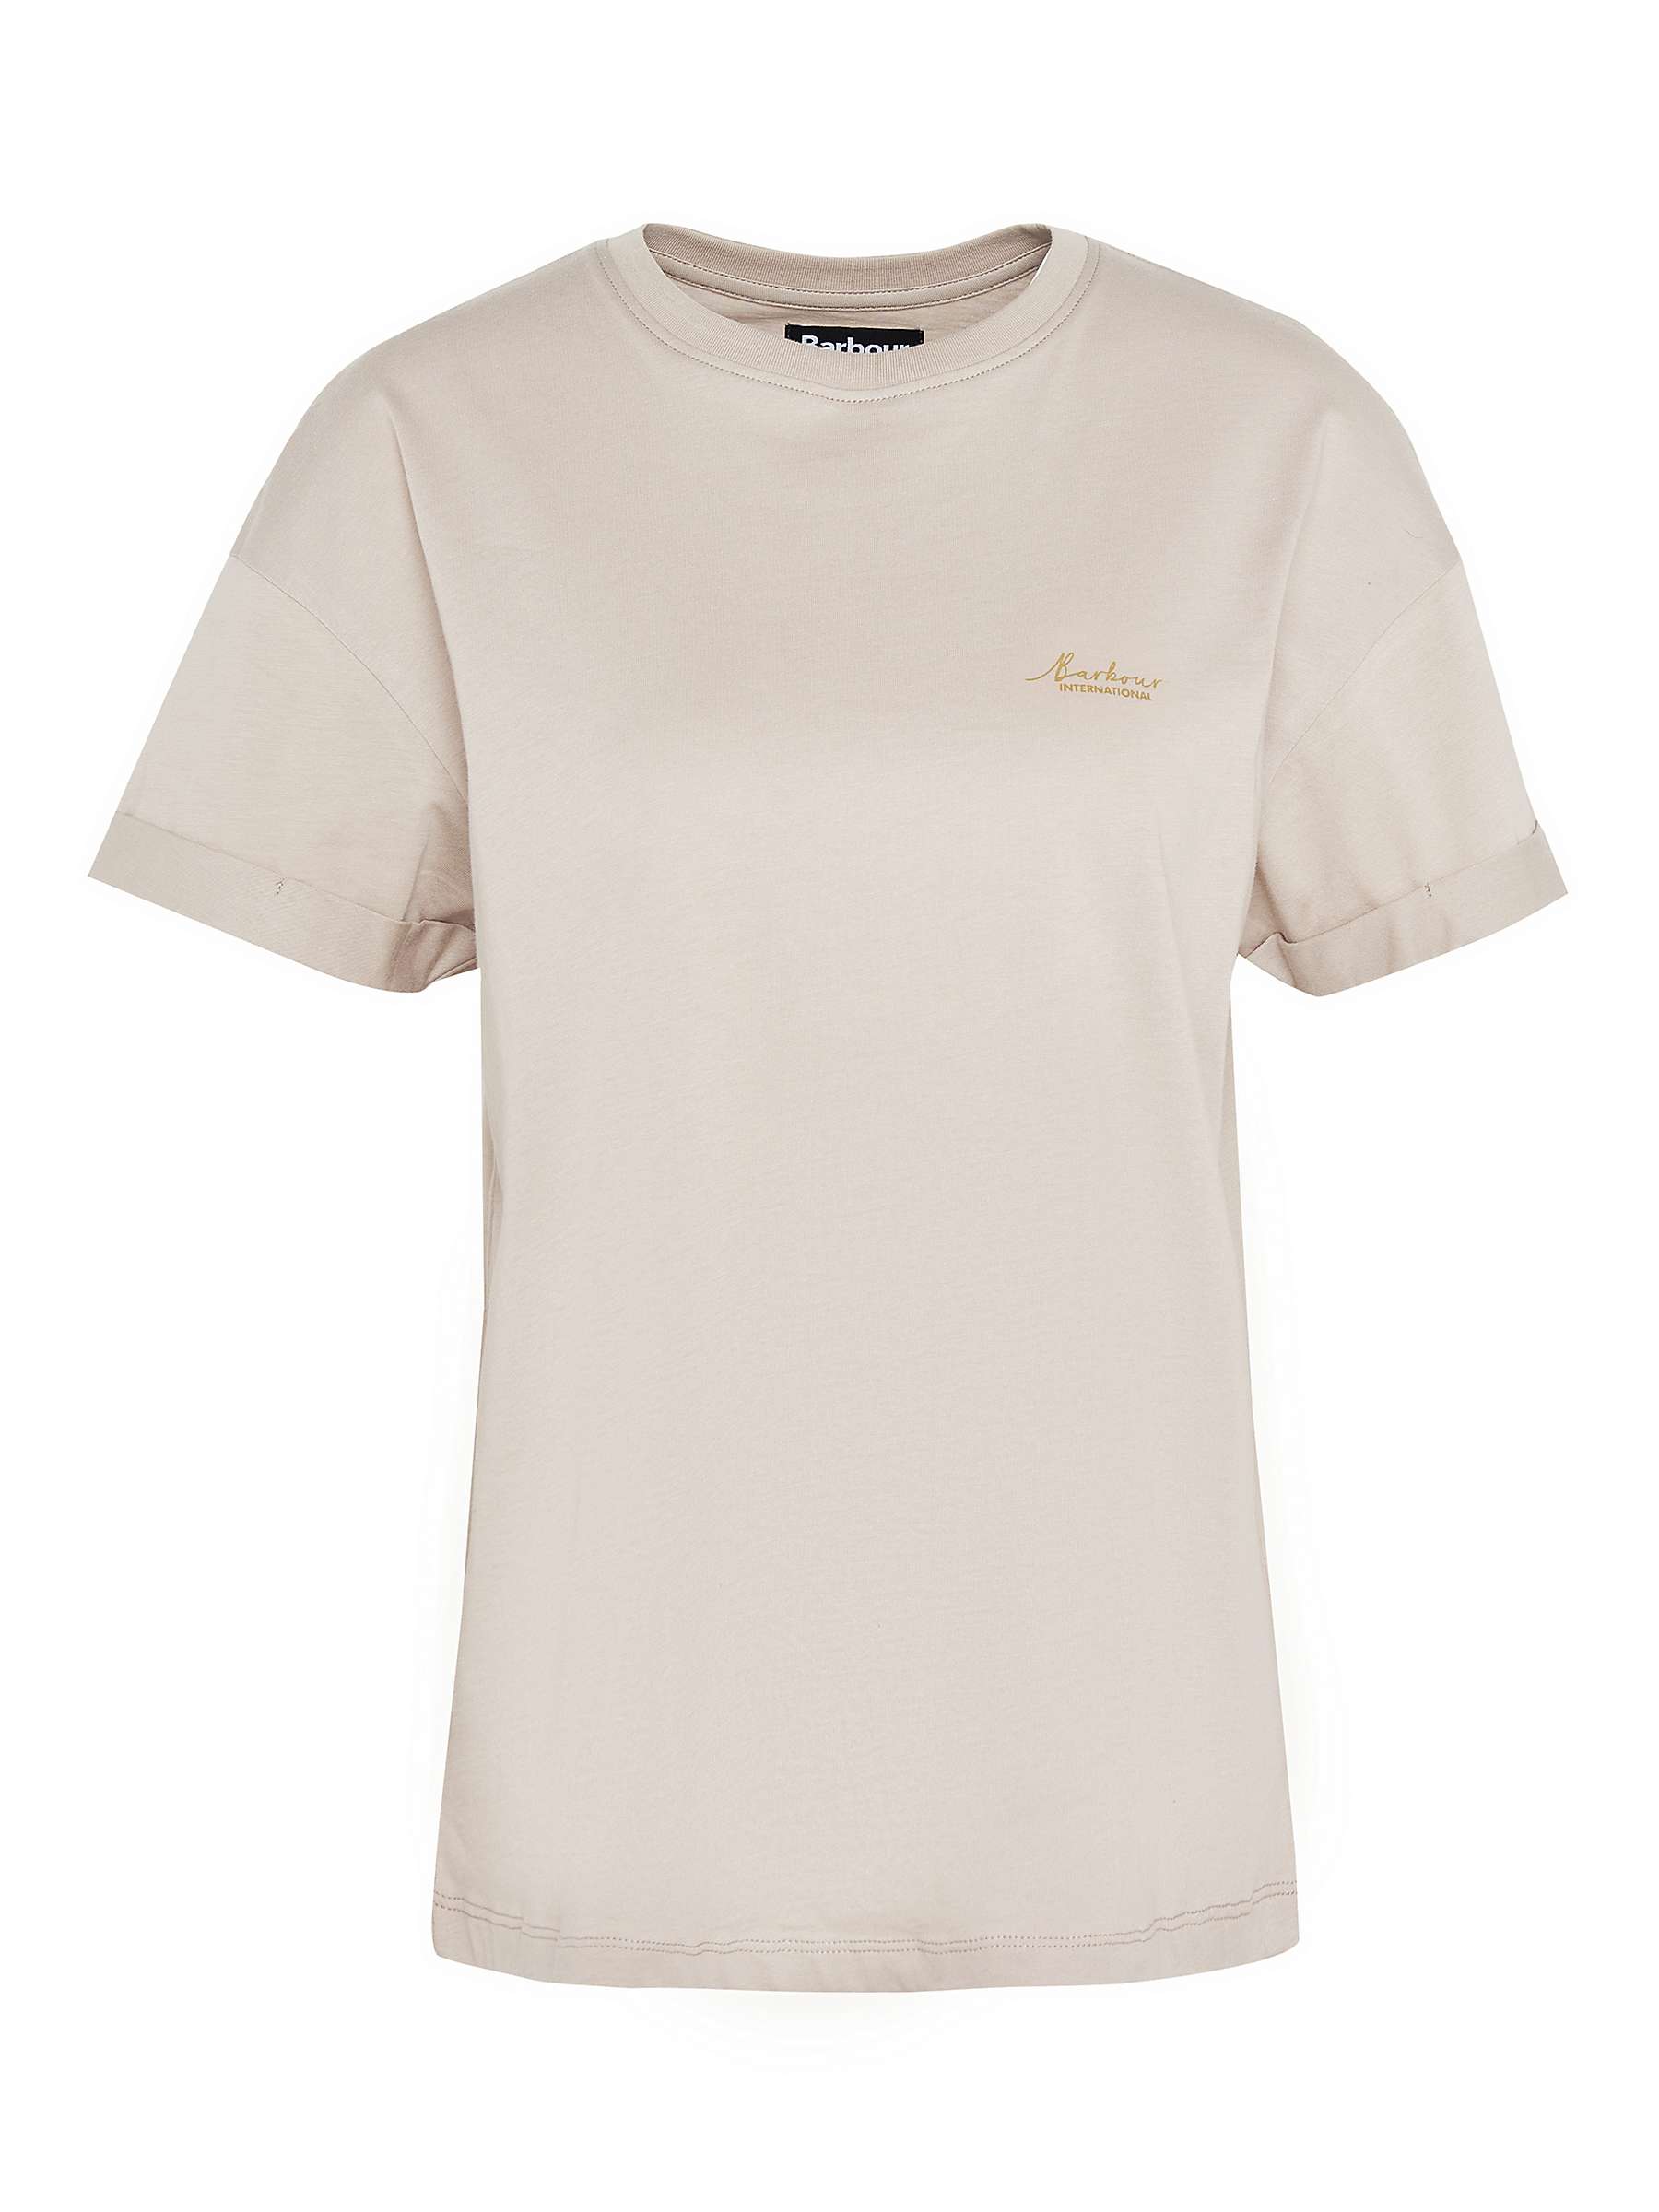 Buy Barbour International Alonso T-Shirt, Oat Online at johnlewis.com